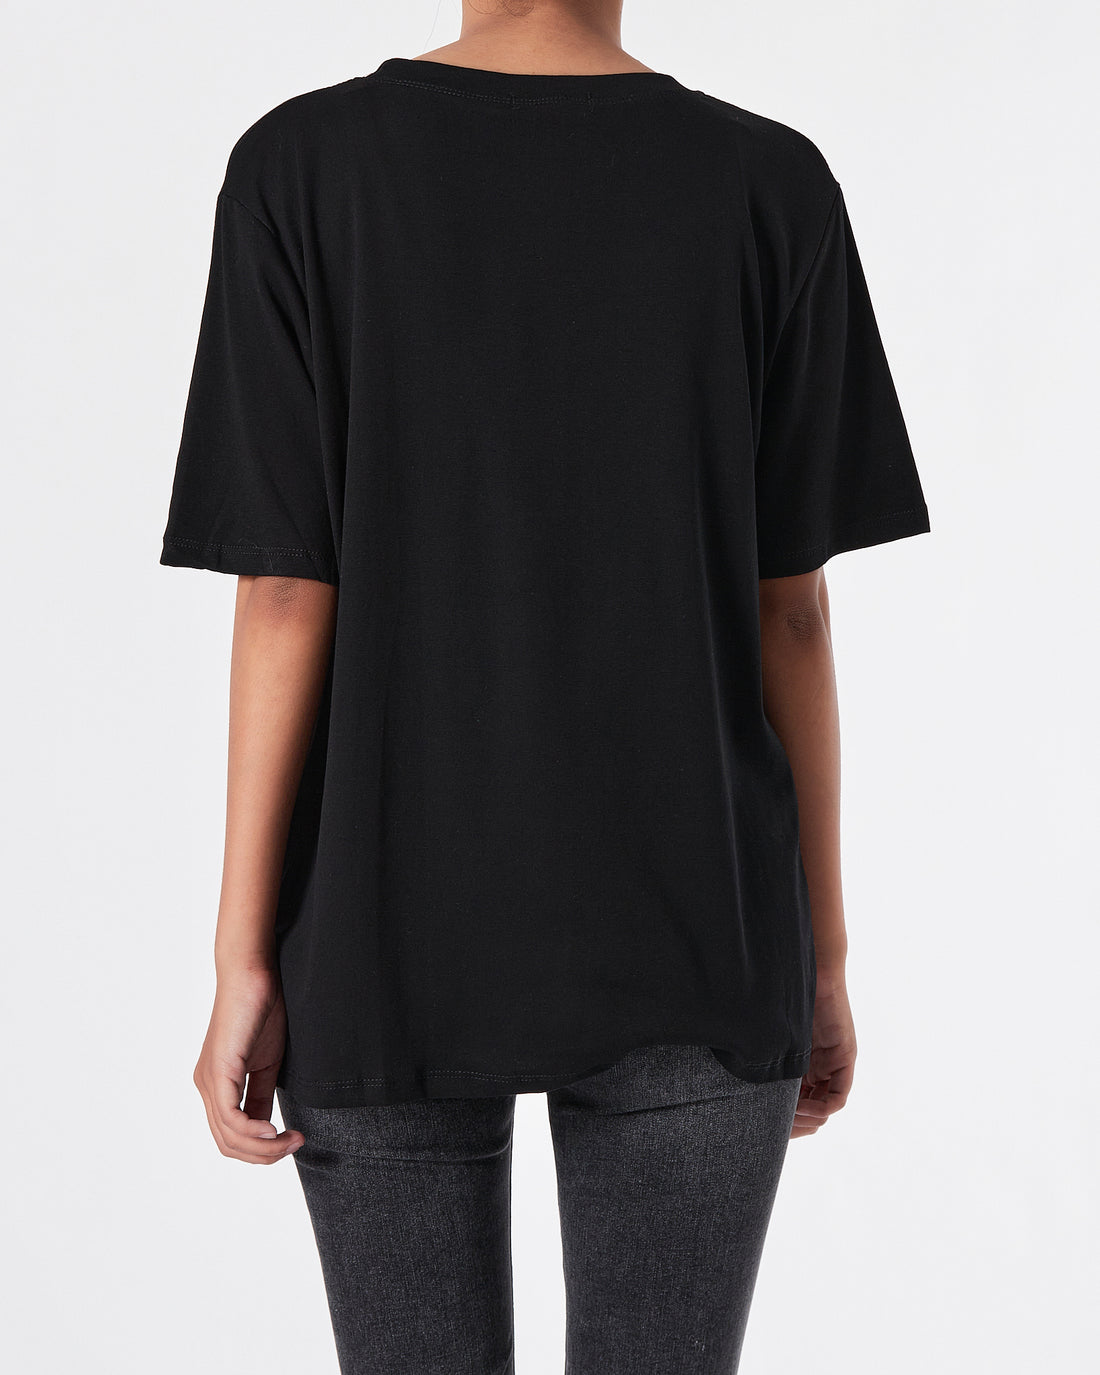 Star Rhinestone Oversize Lady Black T-Shirt 12.90